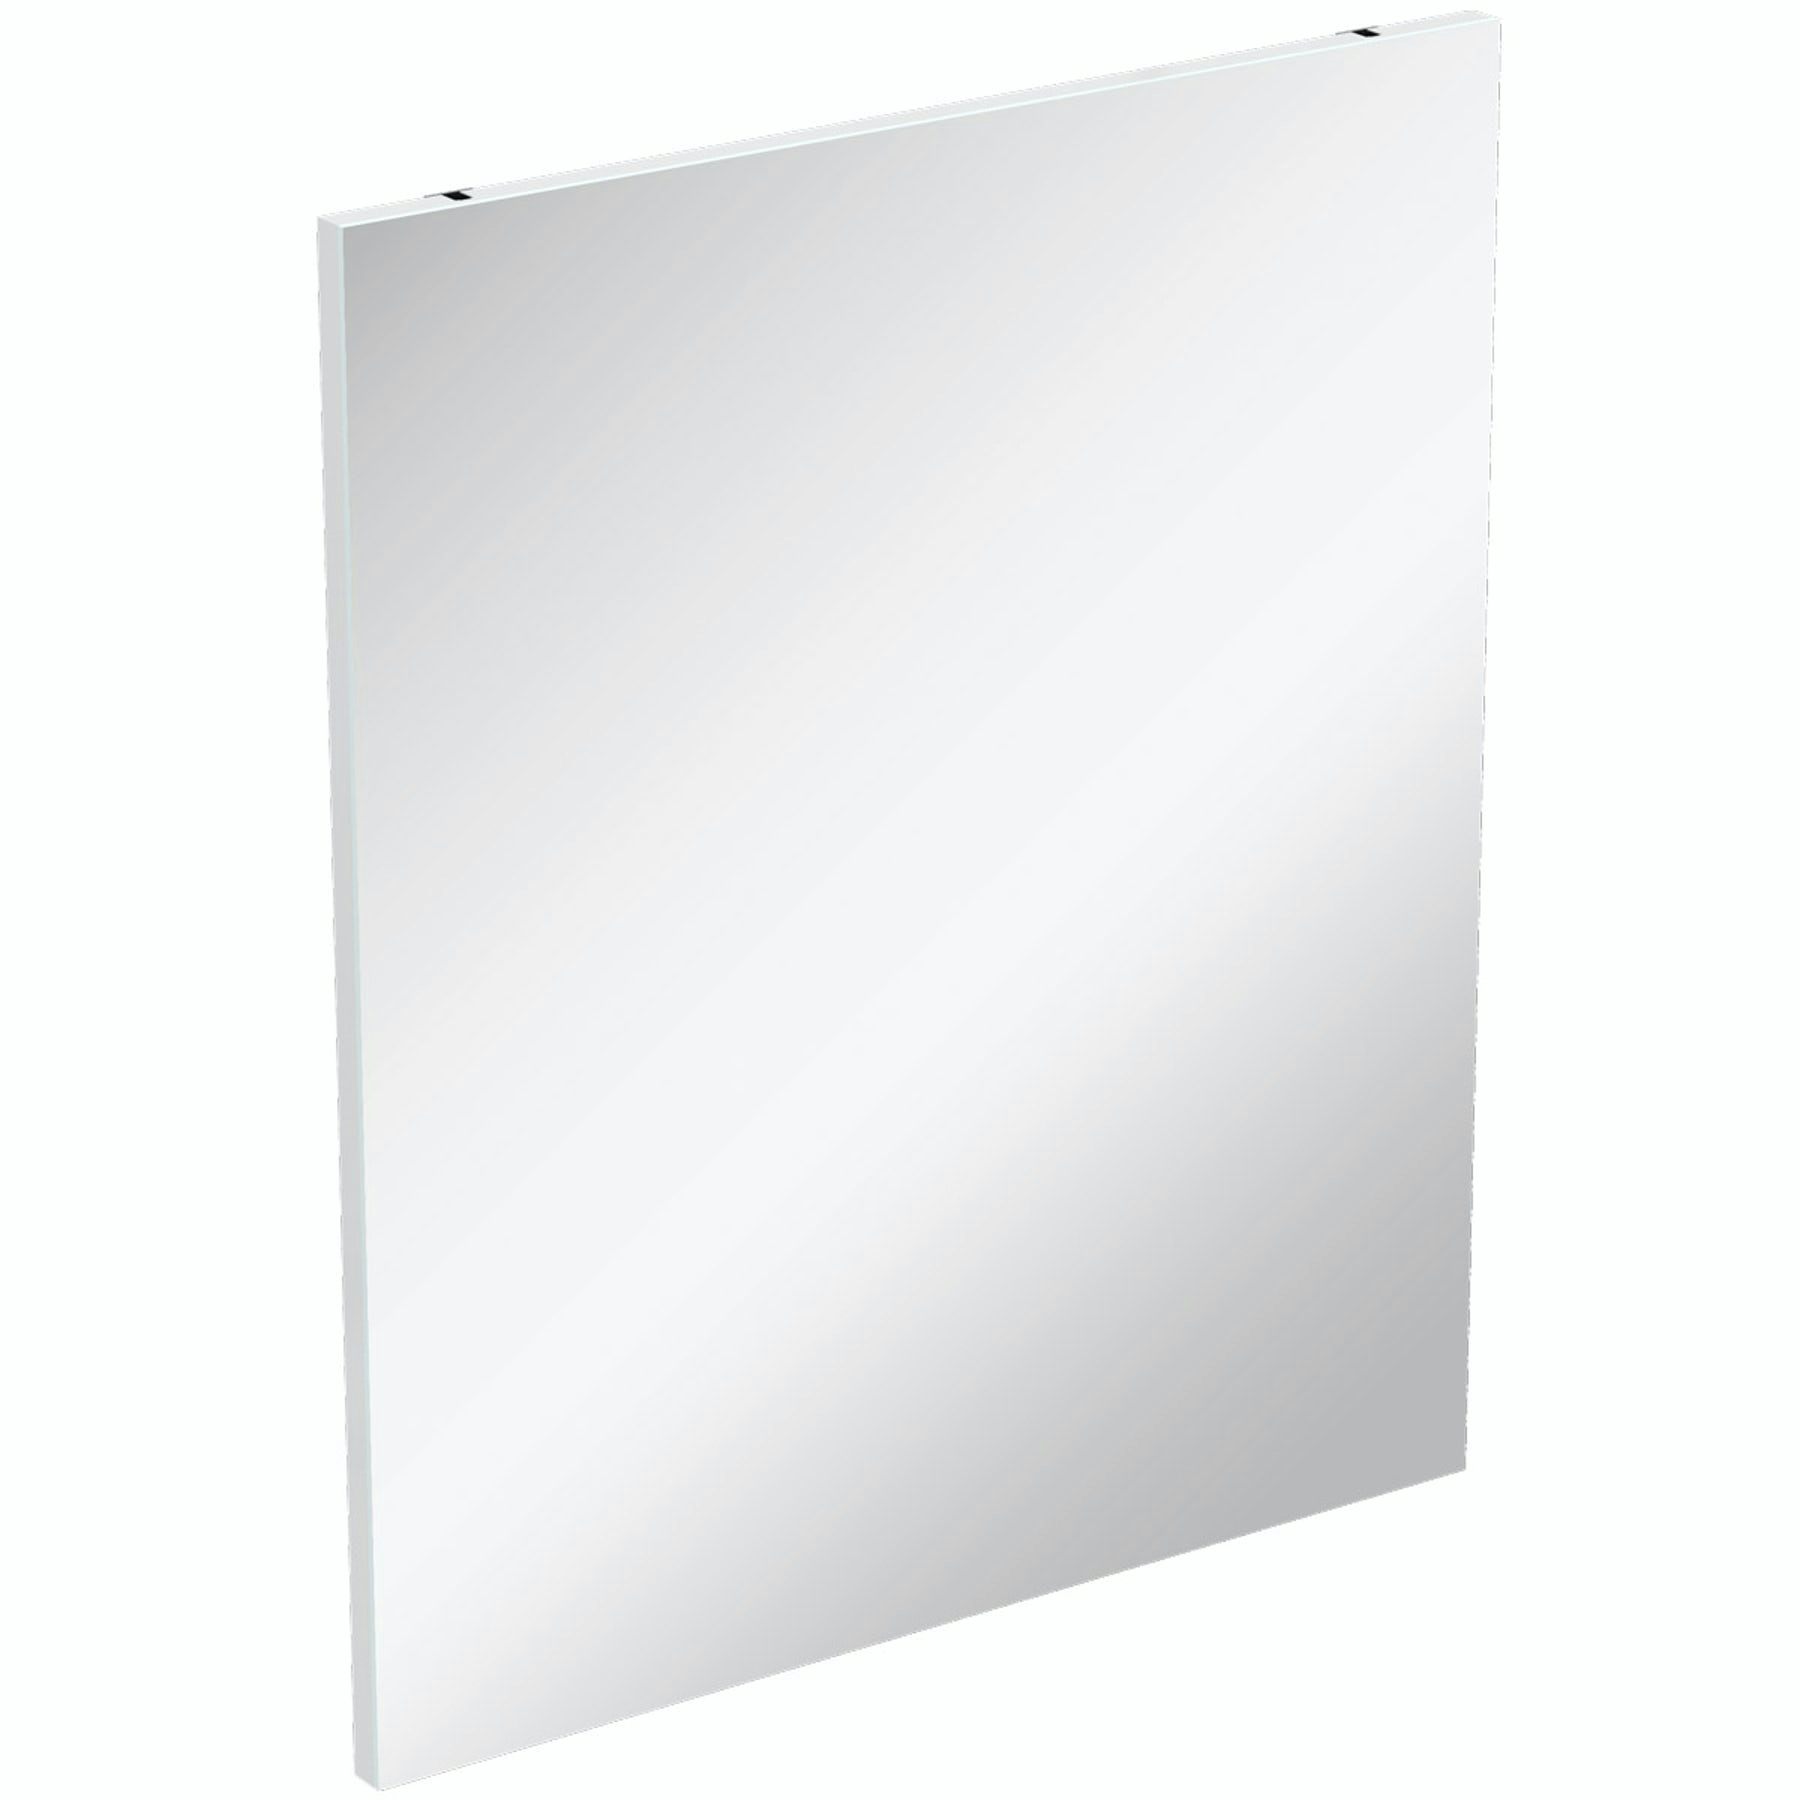 Ideal Standard Connect Air mirror 700 x 600mm